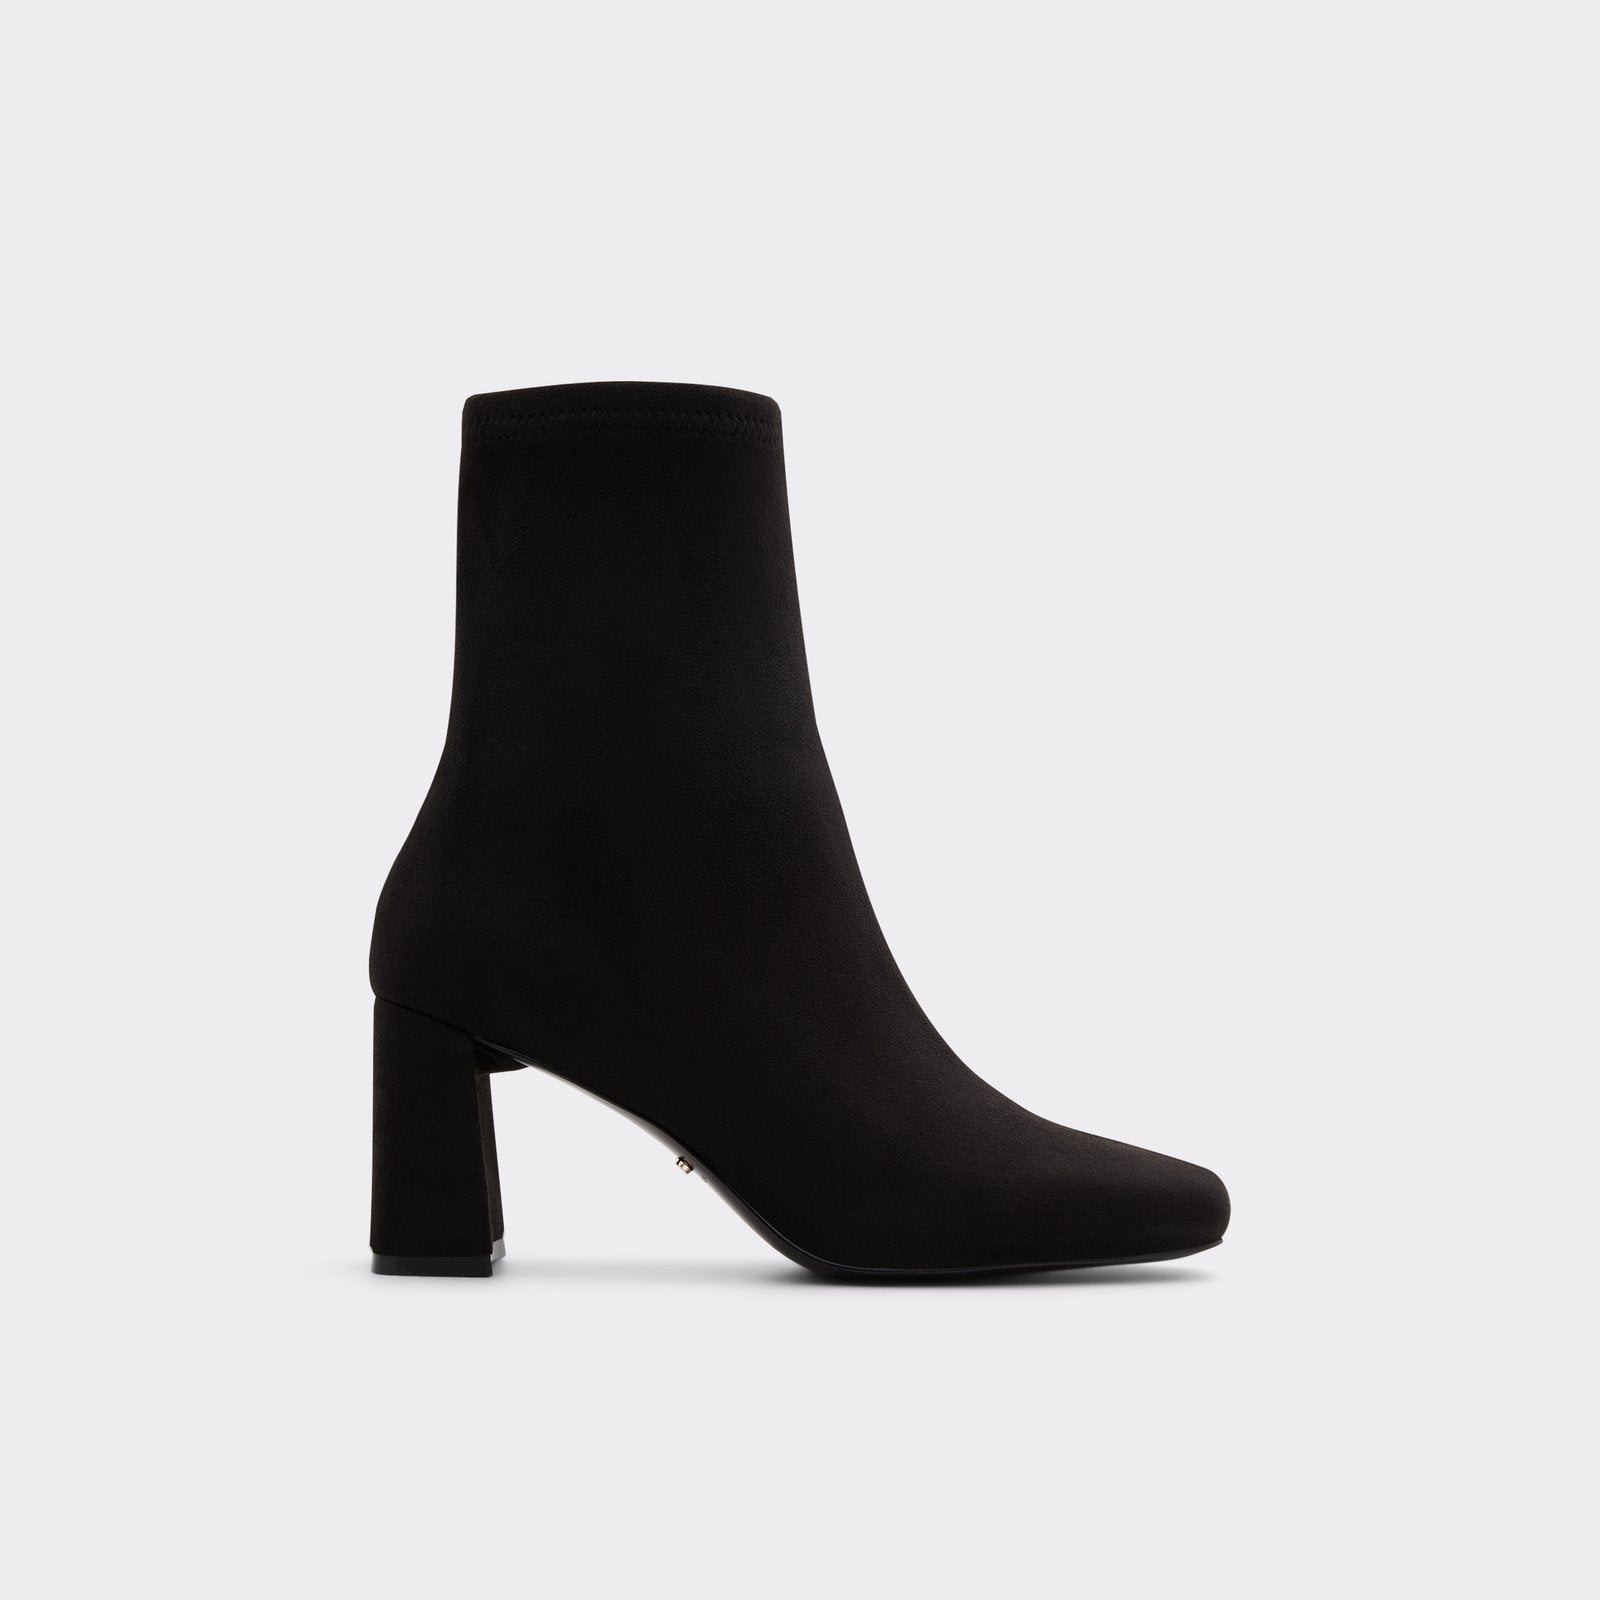 Aldo Women’s Ankle Boots Marcella (Black/Black)